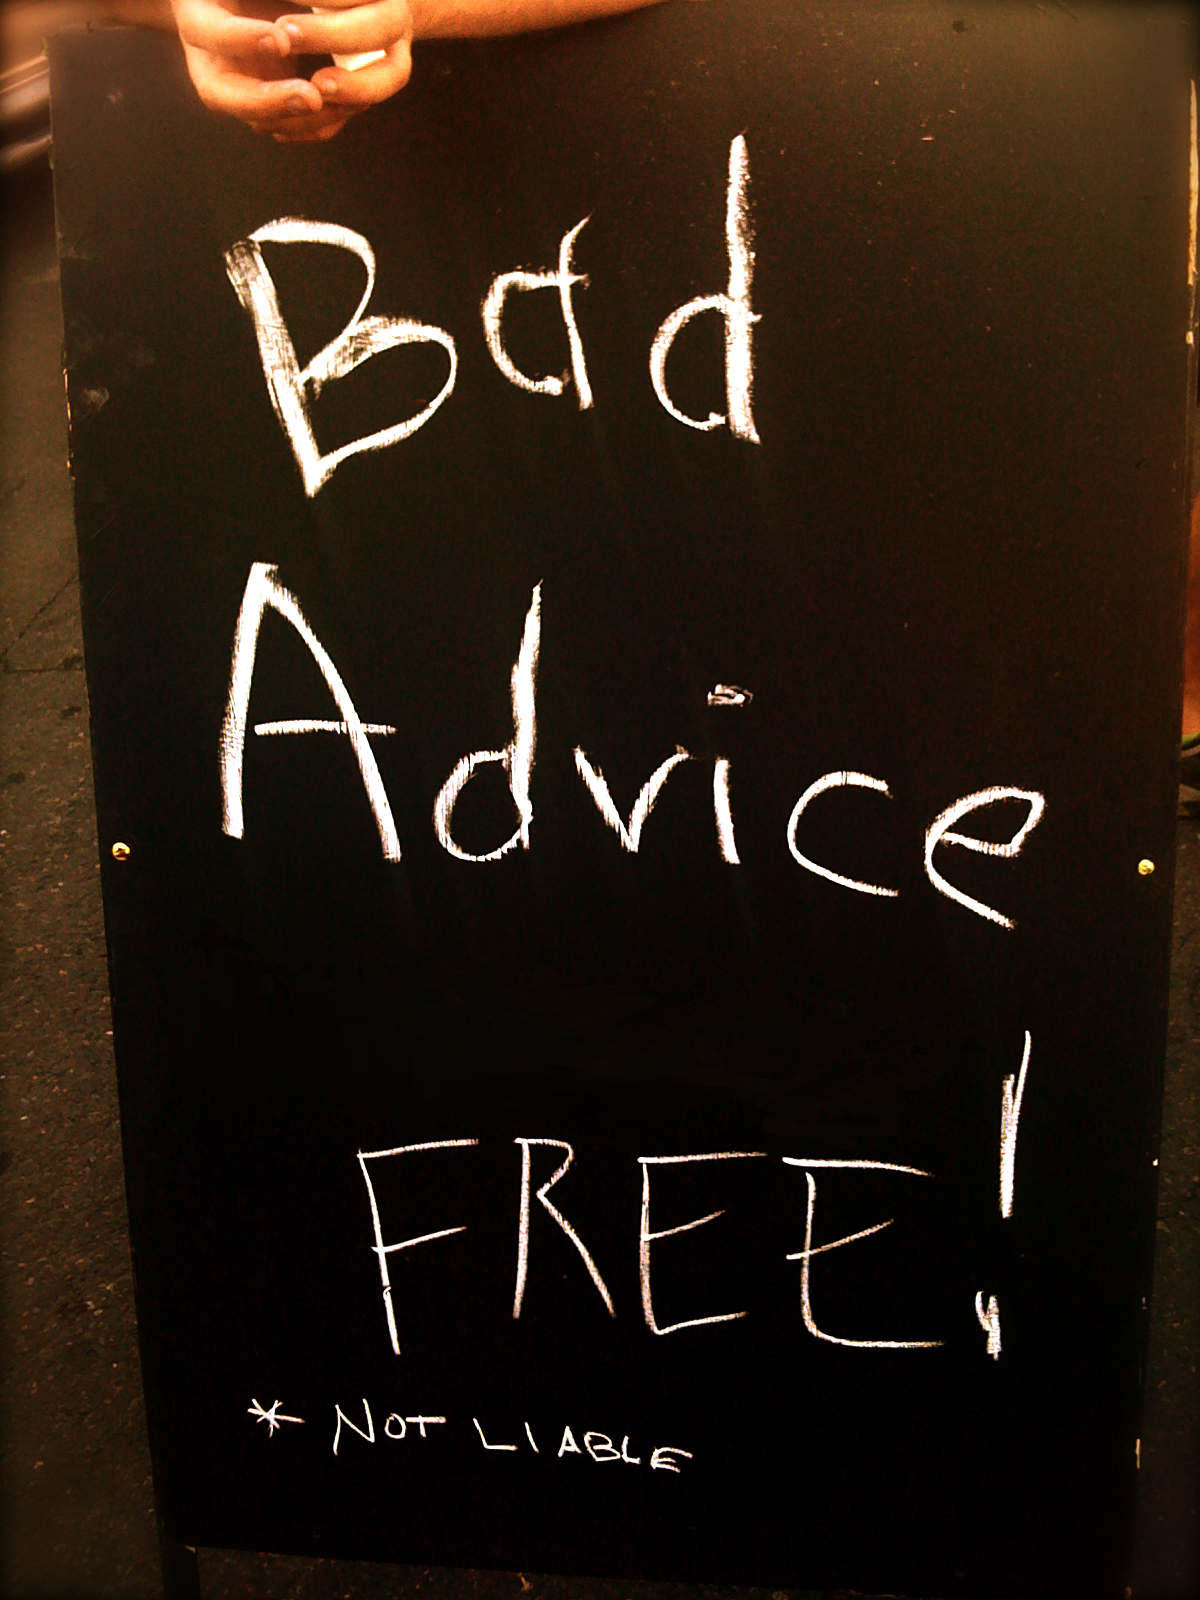 Bad entrepreneur advice